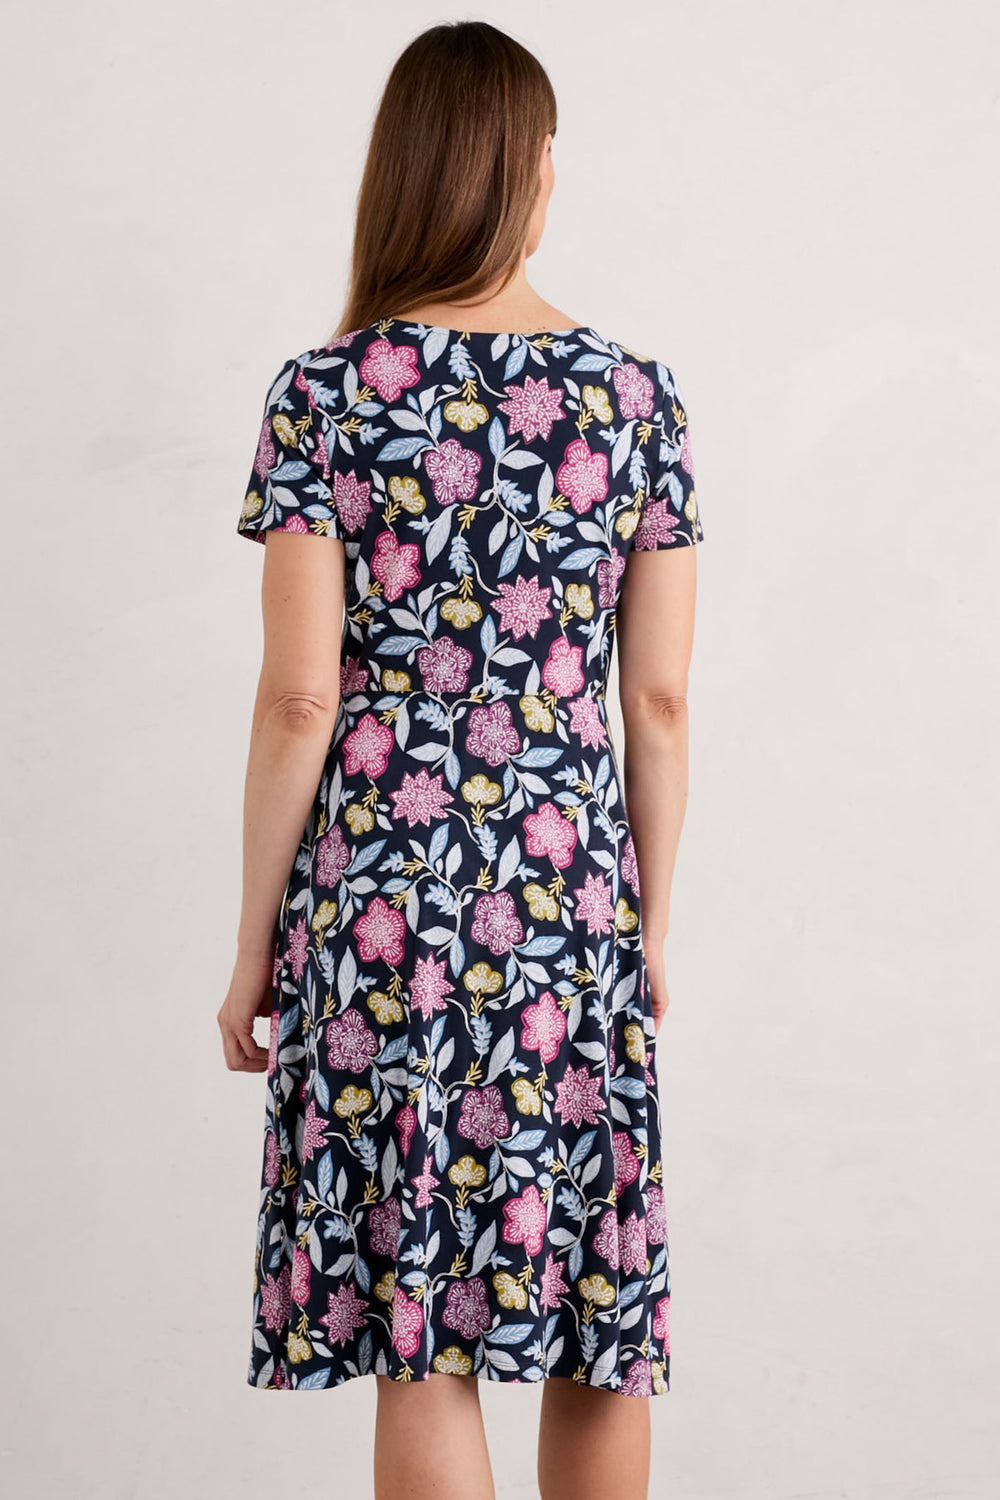 Seasalt April Navy Stone Flower Maritime Print Dress - Shirley Allum Boutique